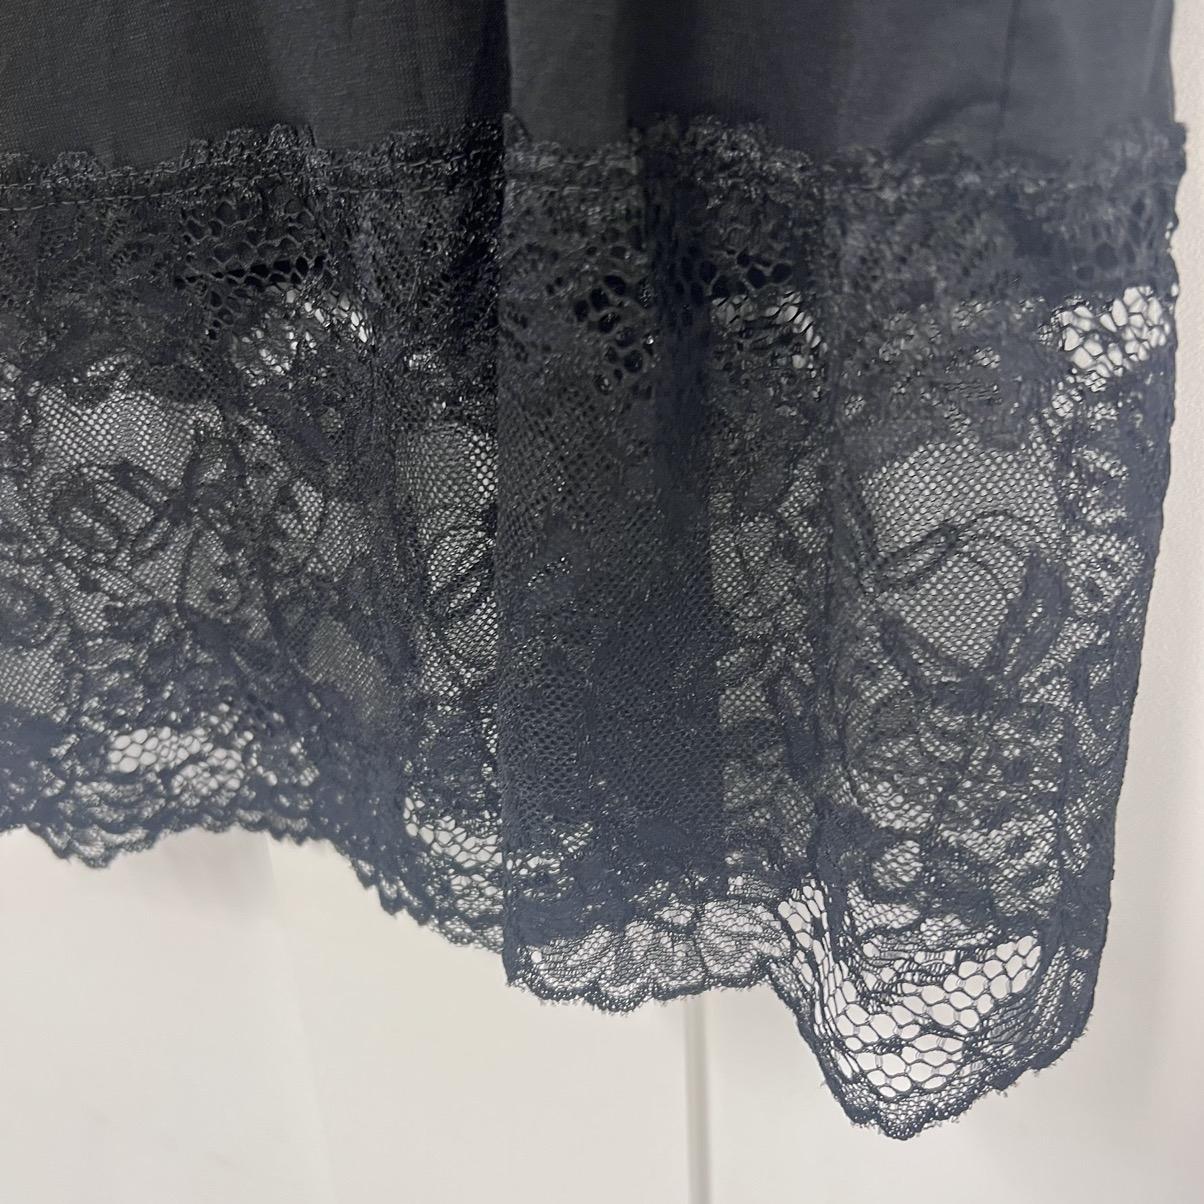 Violeta: Black long plus size layering vest. One size: 18-24/26